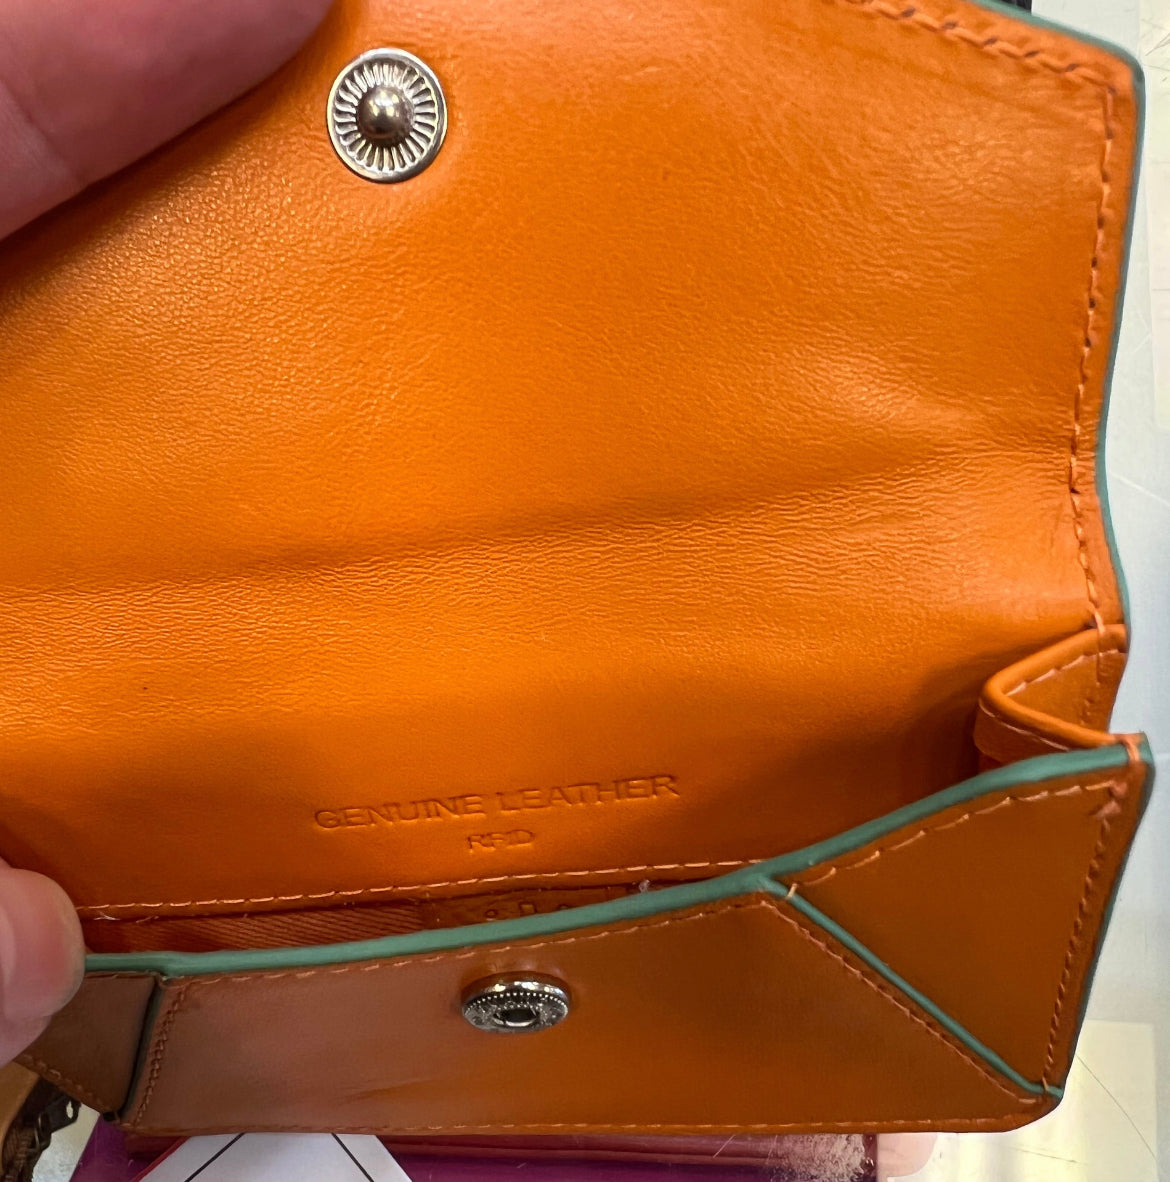 ili New York RFID Card Case Leather Wallet/Coin Purse (Papaya/Turquoise)